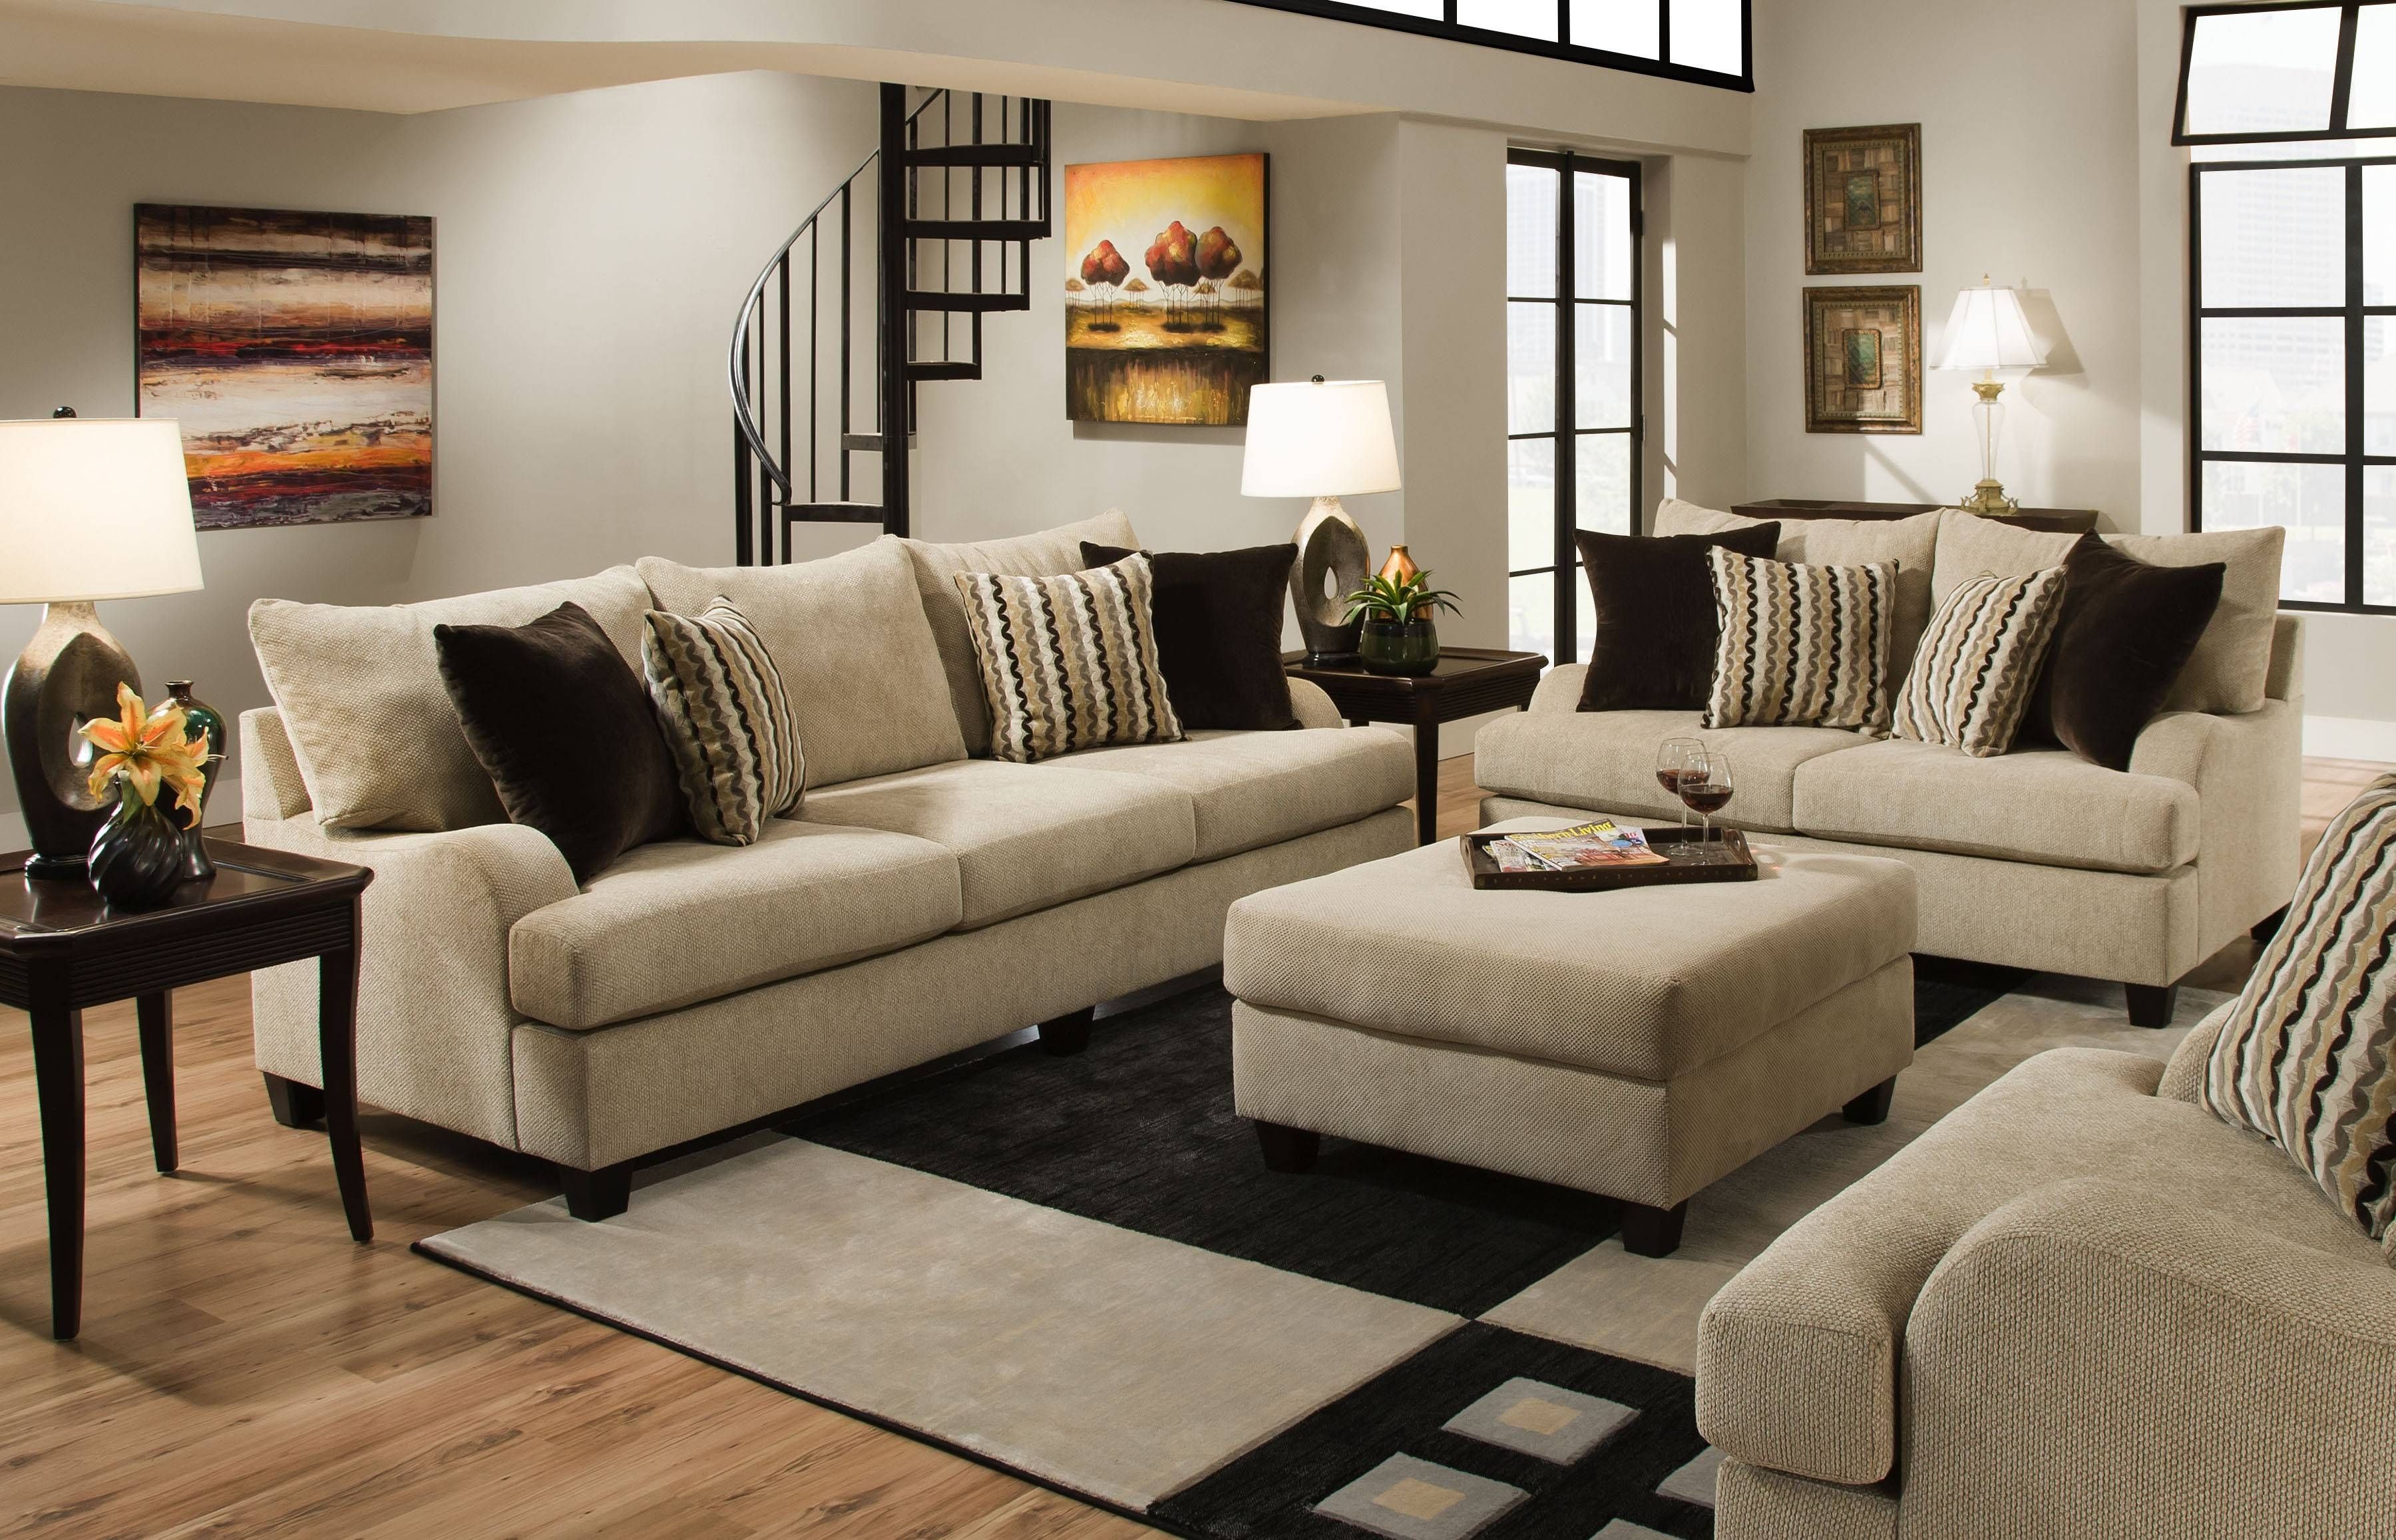 Trinidad Chenile Living Room Set – Sofa & Loveseat | Orange County Intended For Sofa Orange County (View 24 of 25)